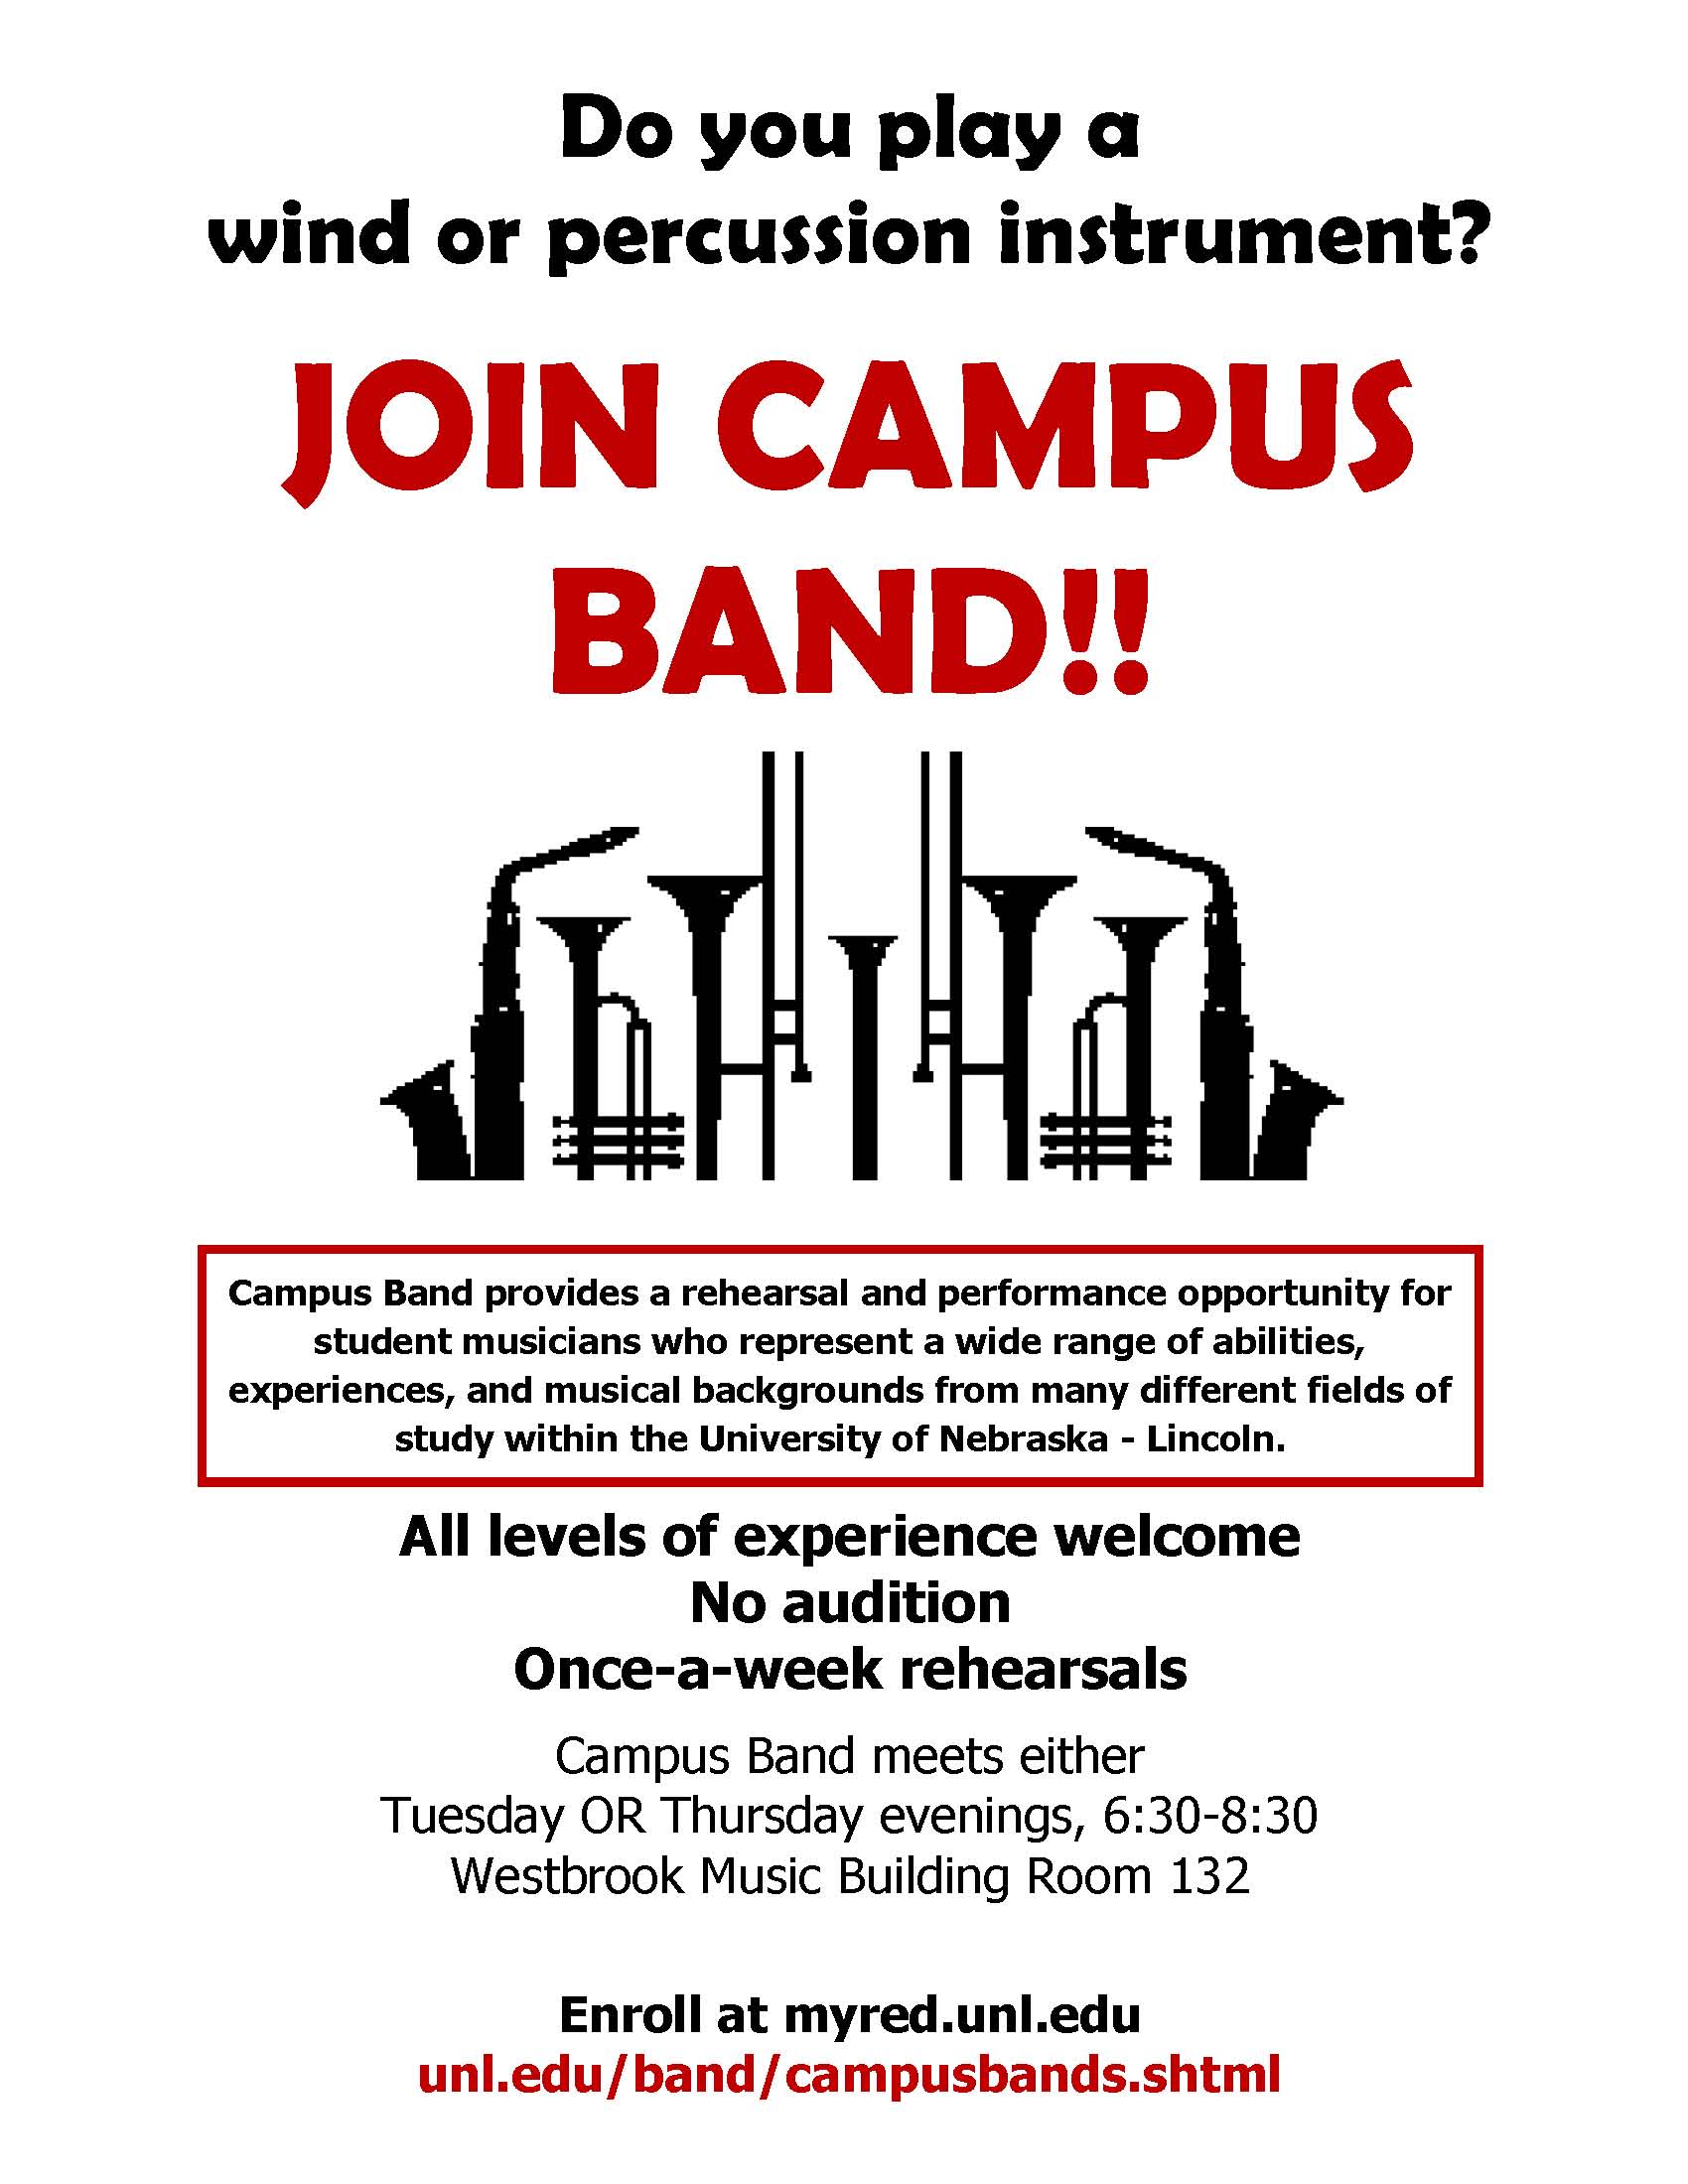 Campus Band